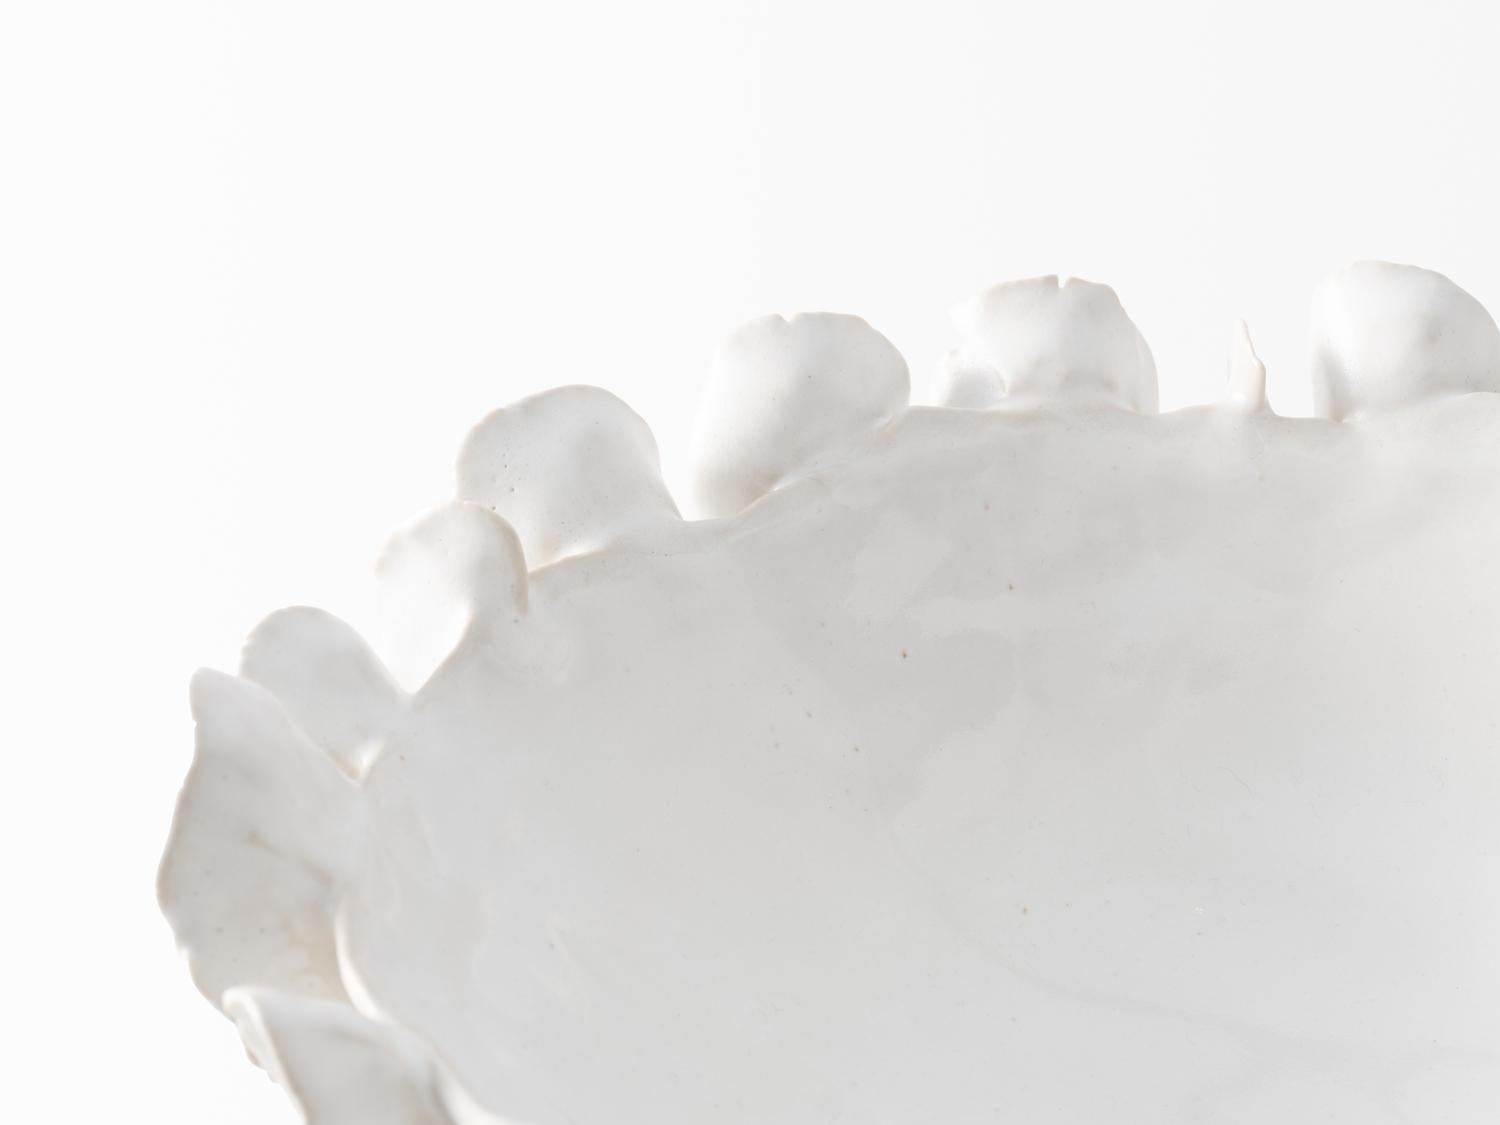 Trish DeMasi.
Petali Pedestal Bowl, 2022.
Glazed stoneware.
Measures: 6 x 11 x 10.75 in.